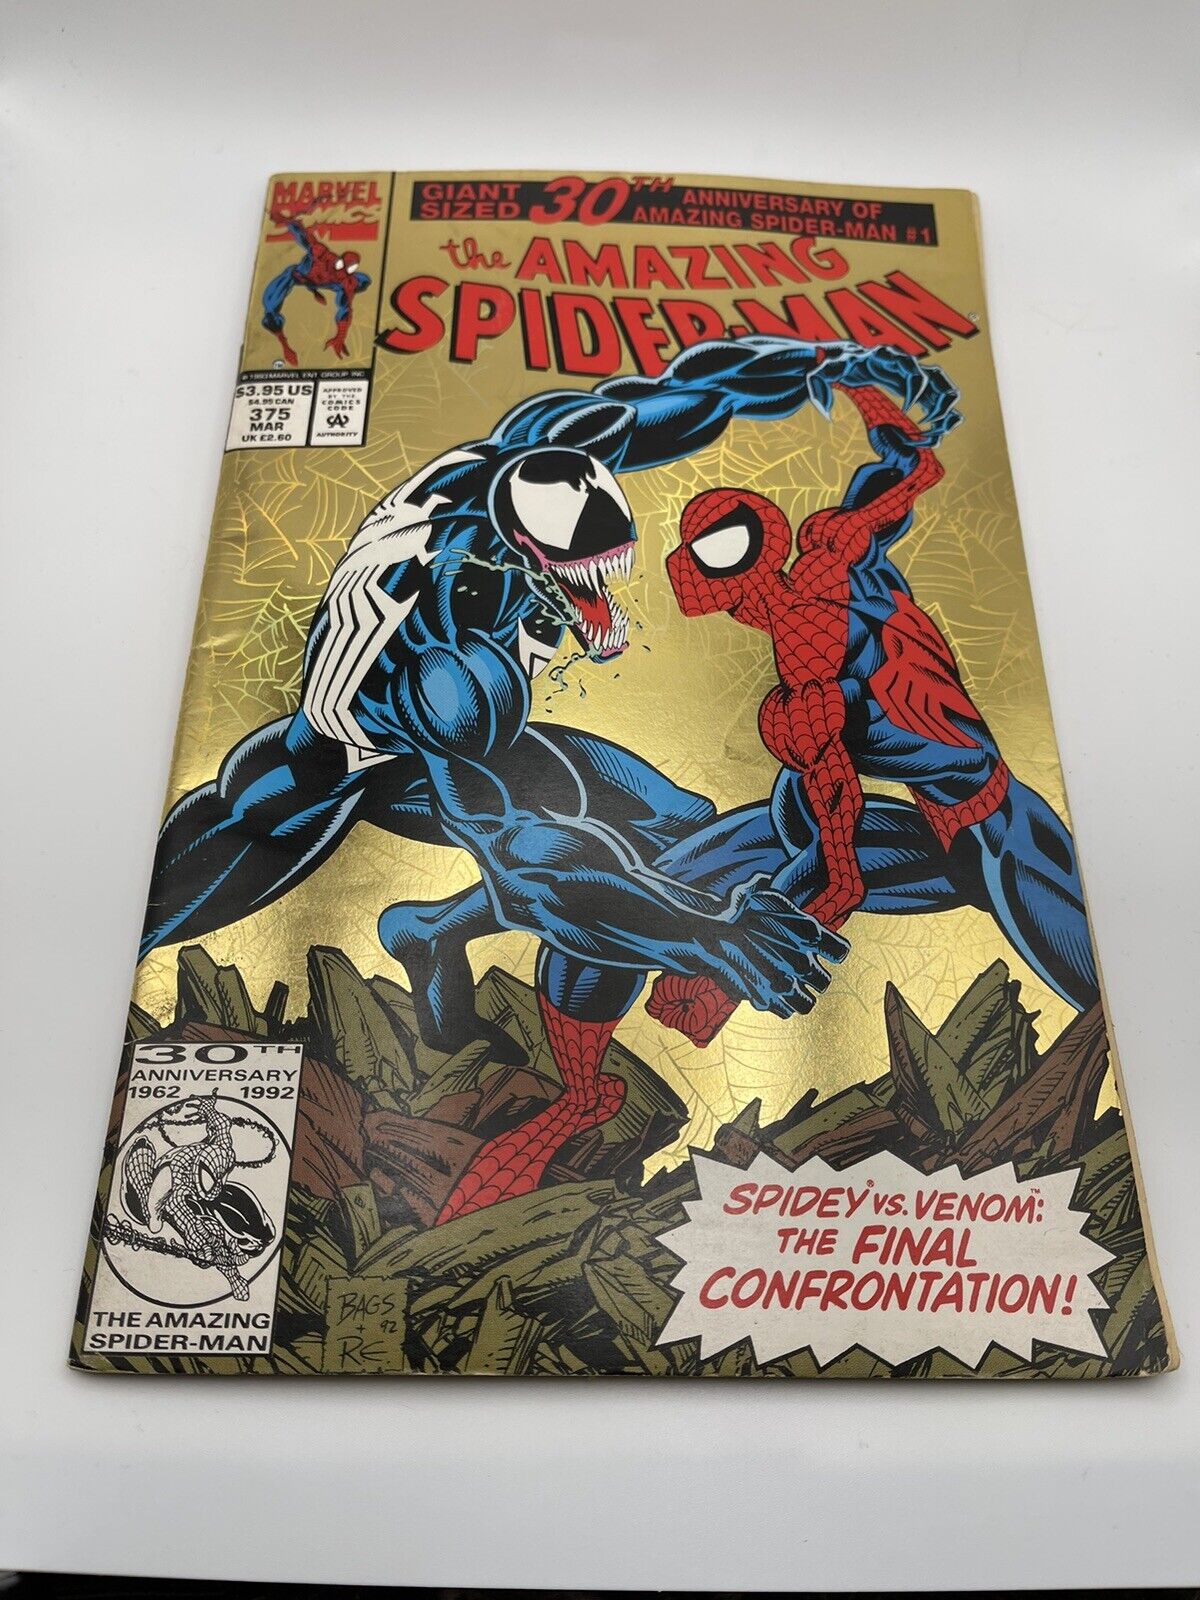 The Amazing Spider-man # 375 the 30th Anniversary Giant Size Spidey vs Venom